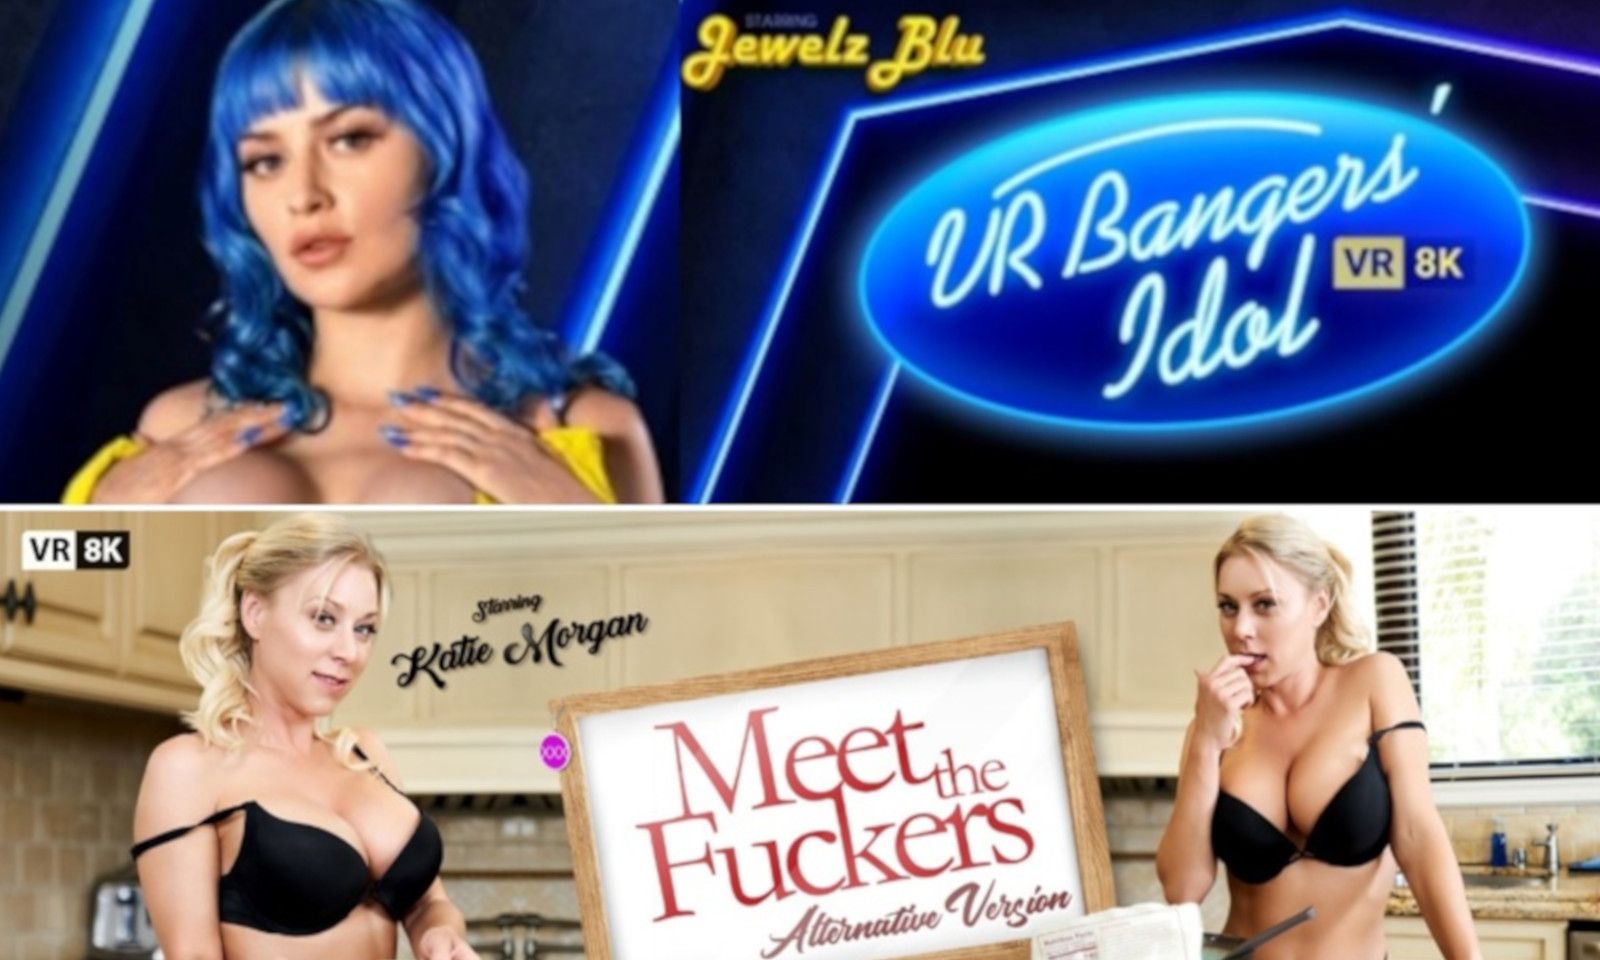 Jewelz Blu, Chloe Temple, Katie Morgan Headline for VR Bangers